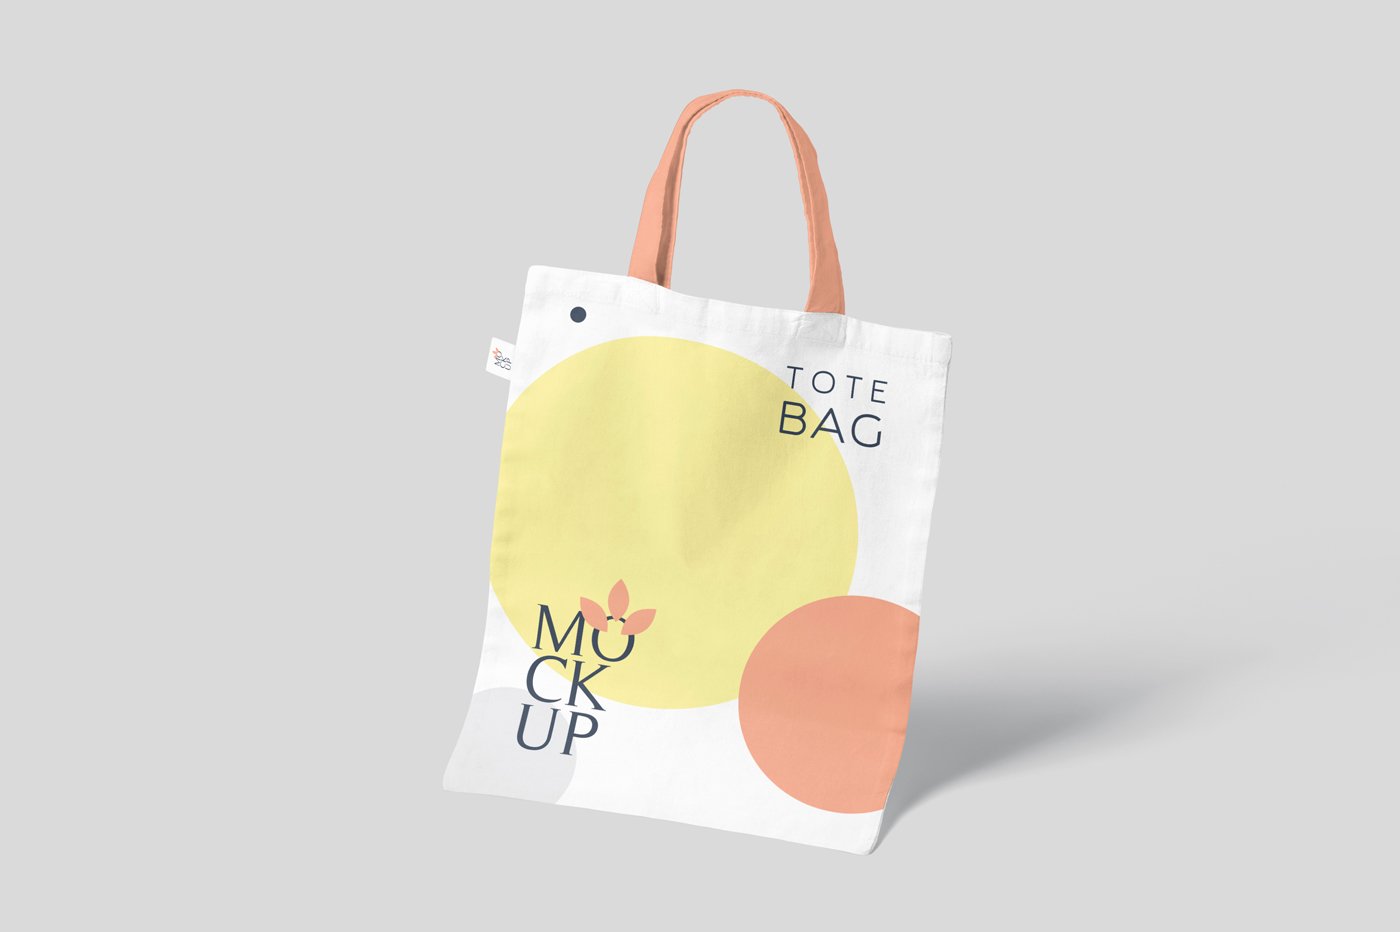 Tote Bag Mockups cover image.